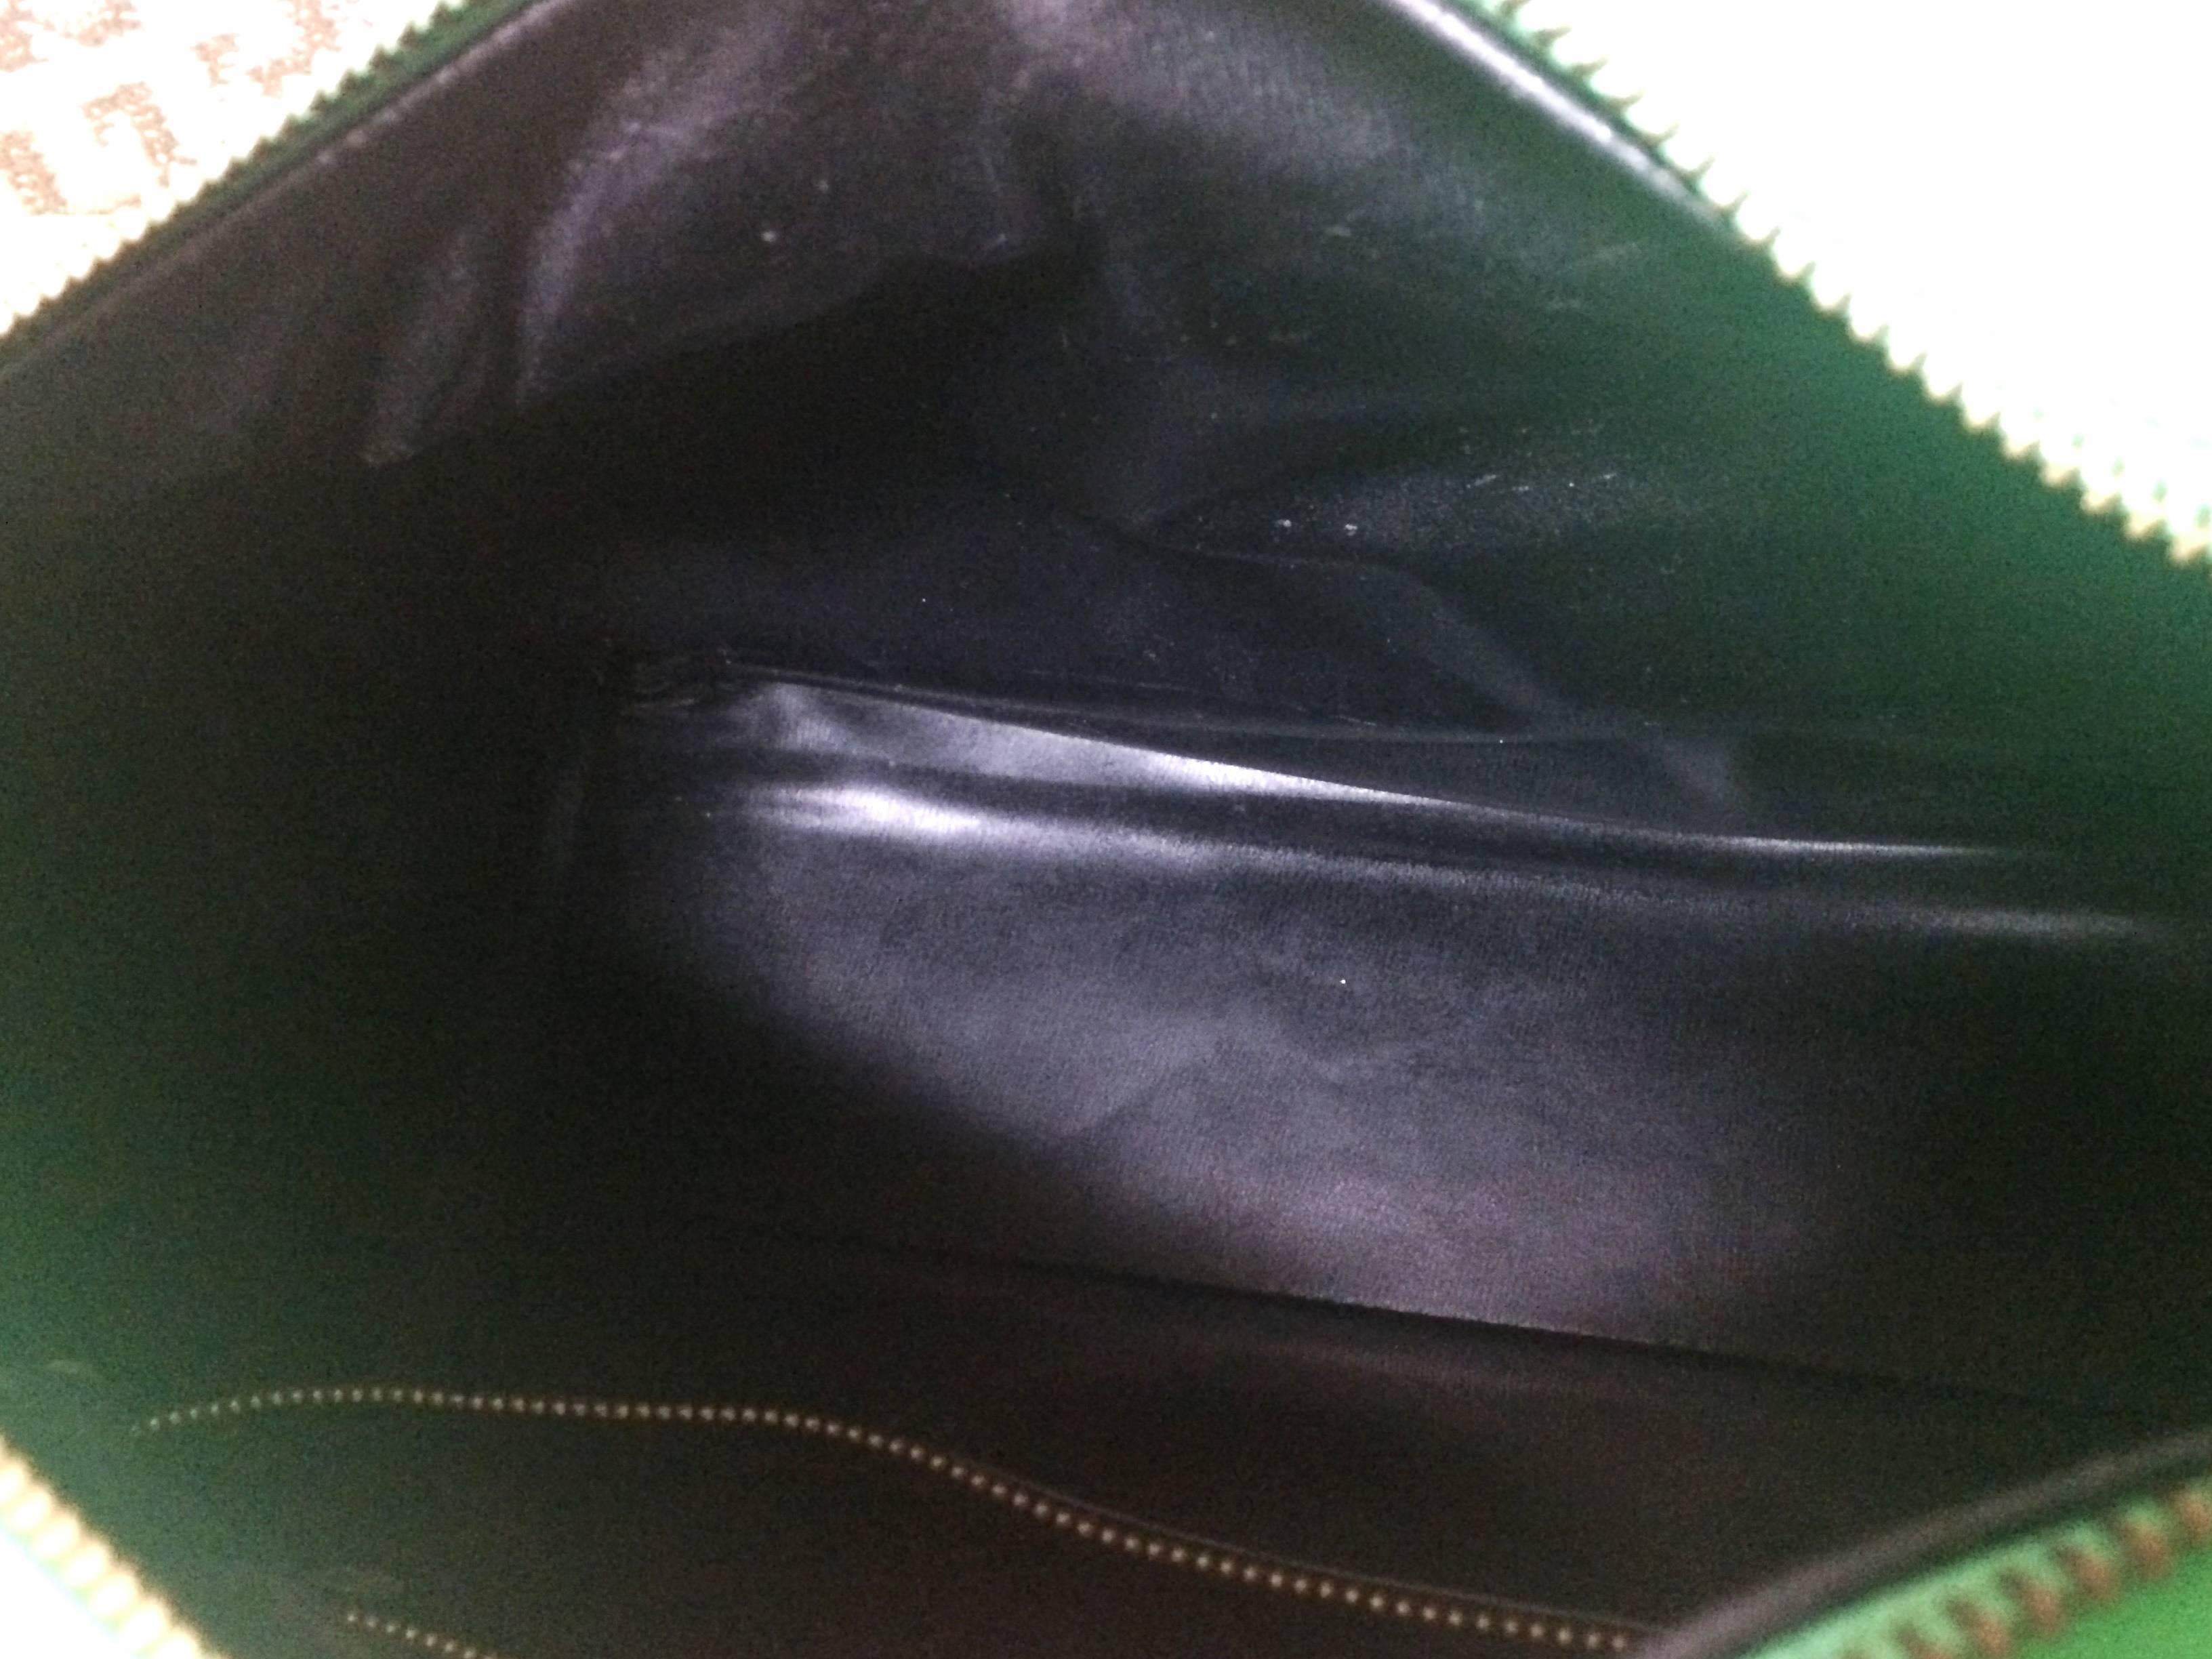 Vintage SONIA RYKIEL green leather handbag purse in speedy bag style with chains 1